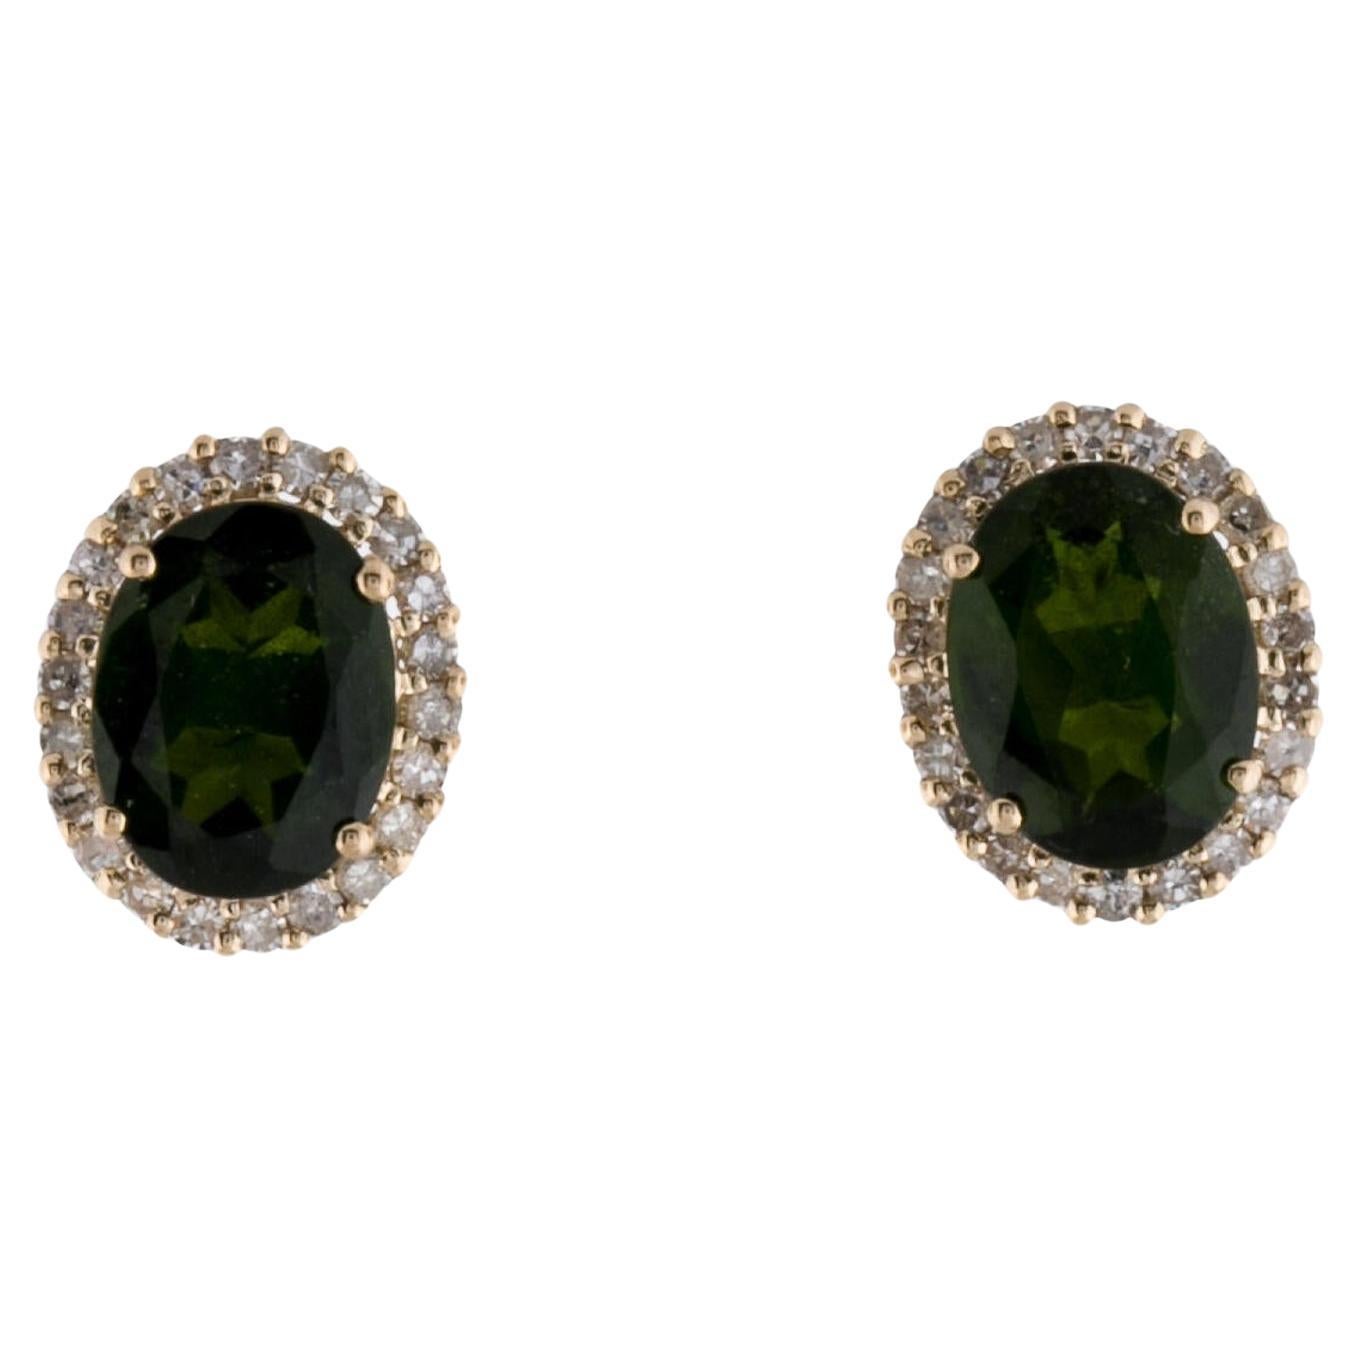 Elegant 14K Diopside & Diamond Stud Earrings - Gemstone Jewelry Collection For Sale